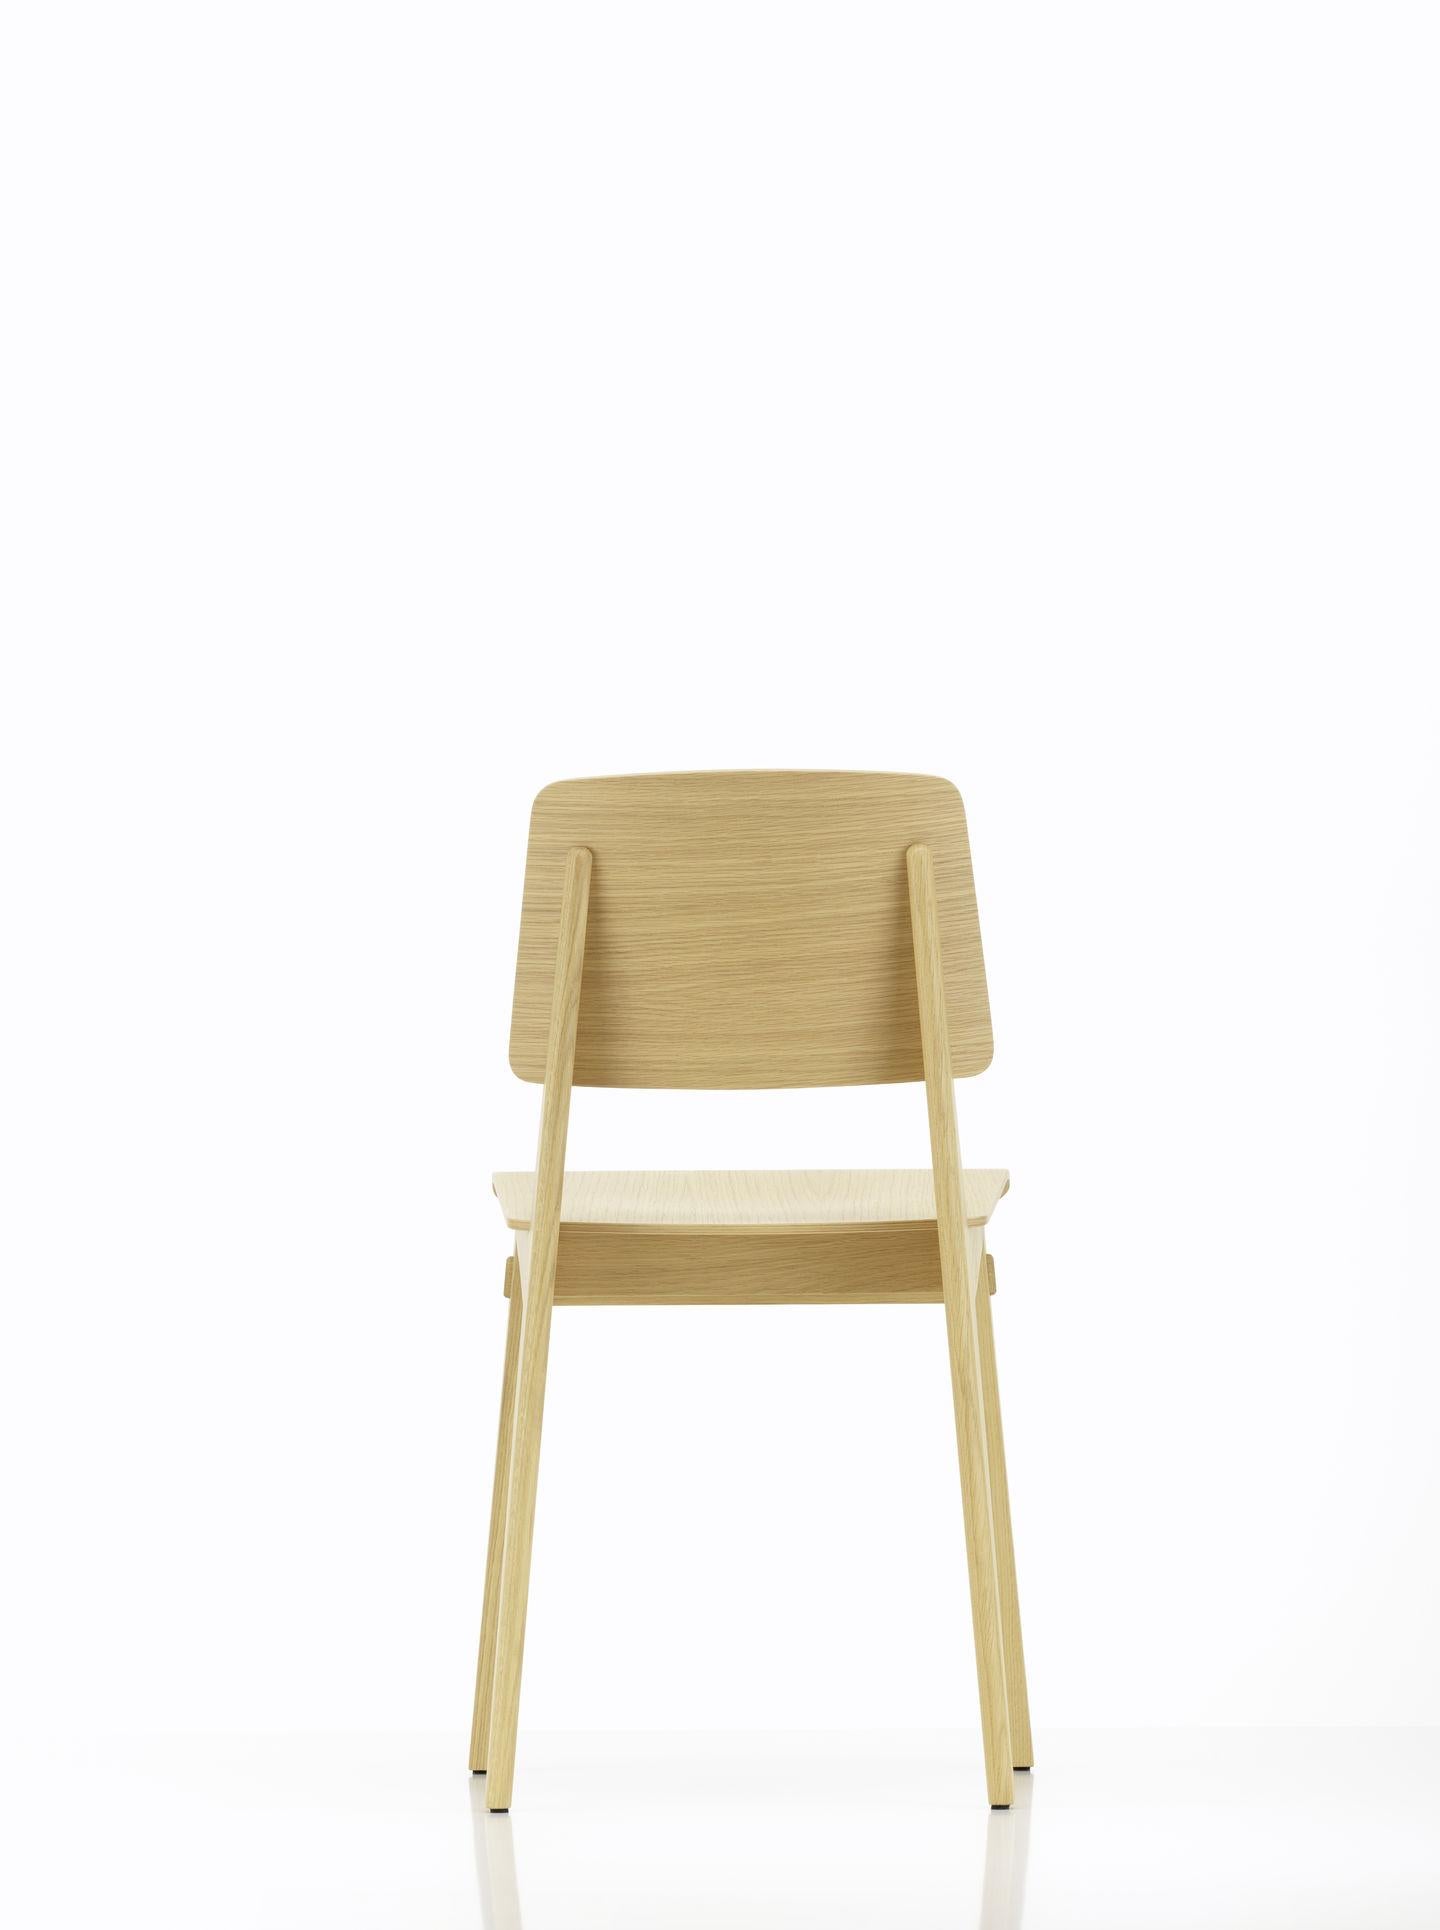 Jean Prouvé Light Oak Chaise Tout Bois Chair by Vitra 7